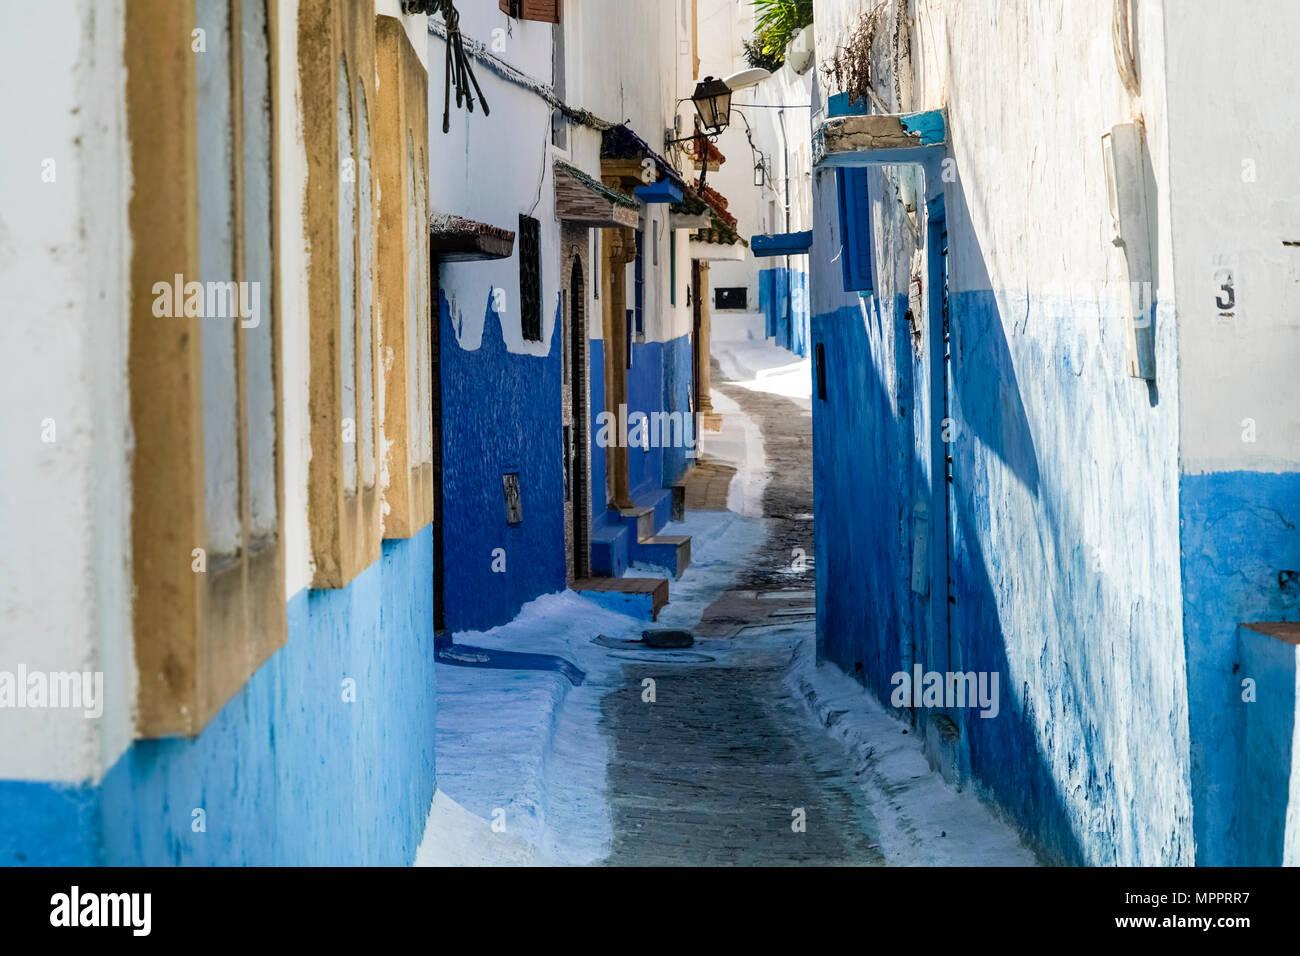 Morocco, Rabat, narrow alley Stock Photo